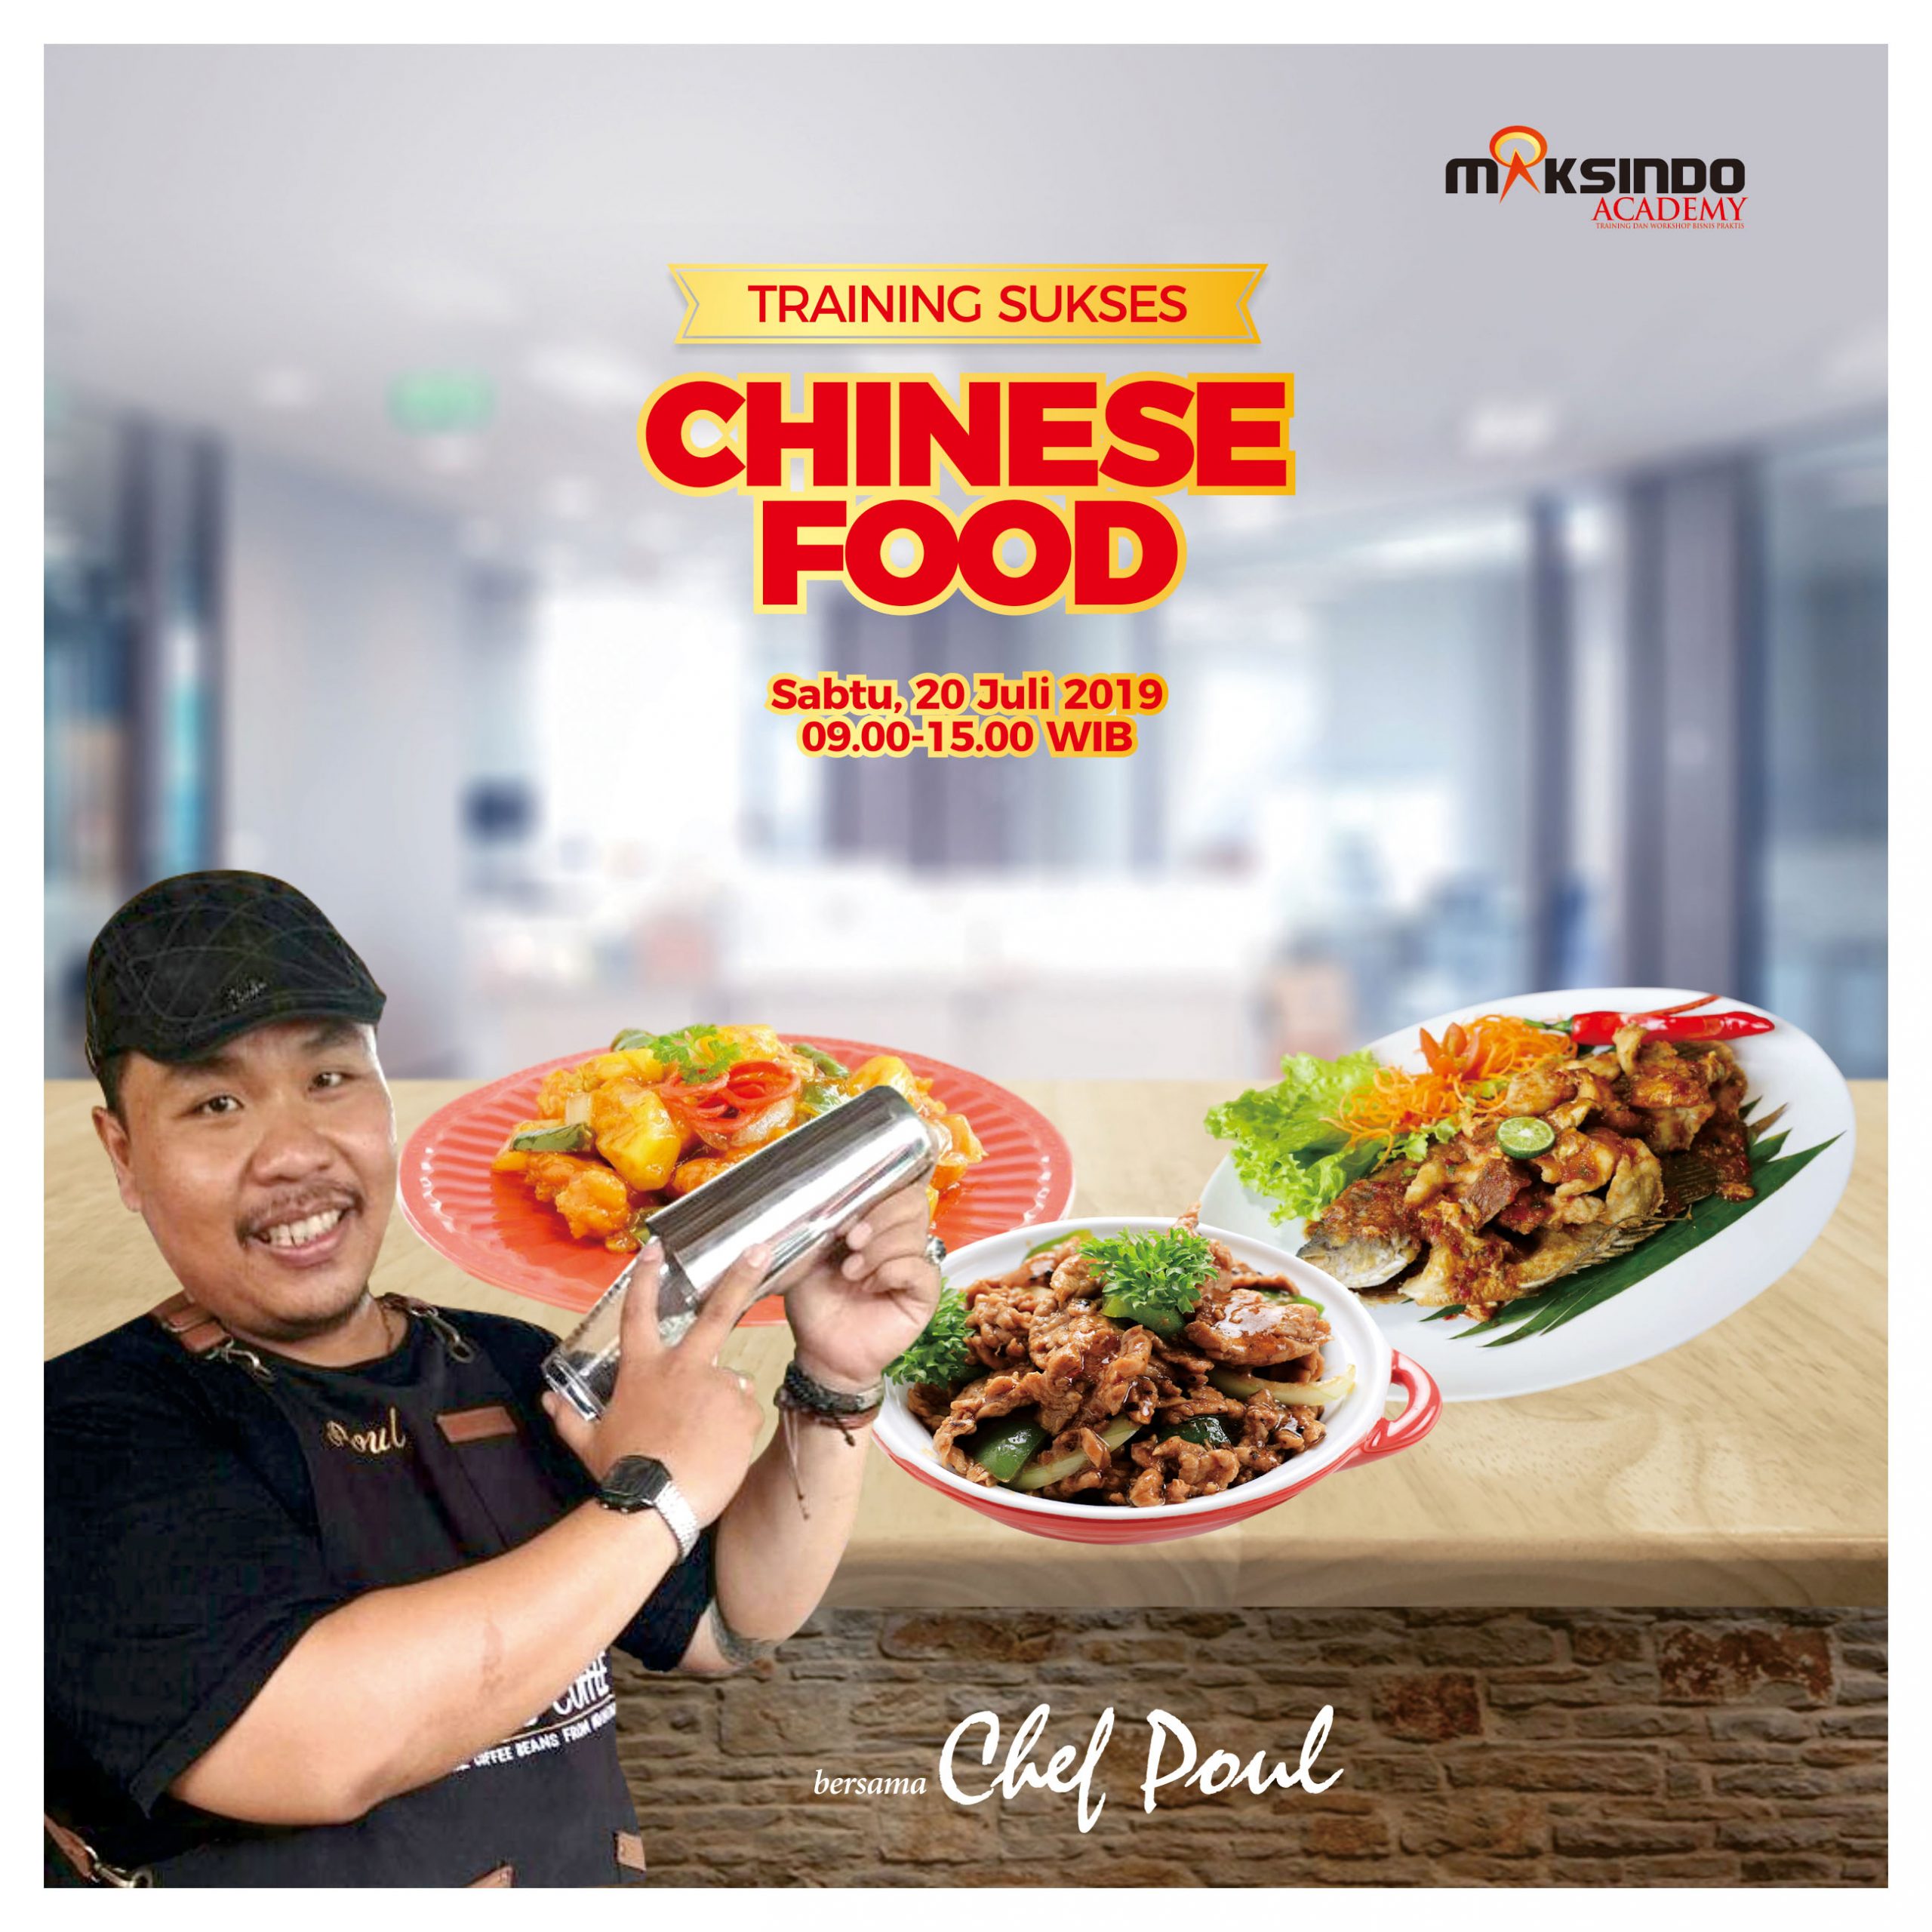 Training Sukses Chinese Food, Sabtu 20 Juli 2019